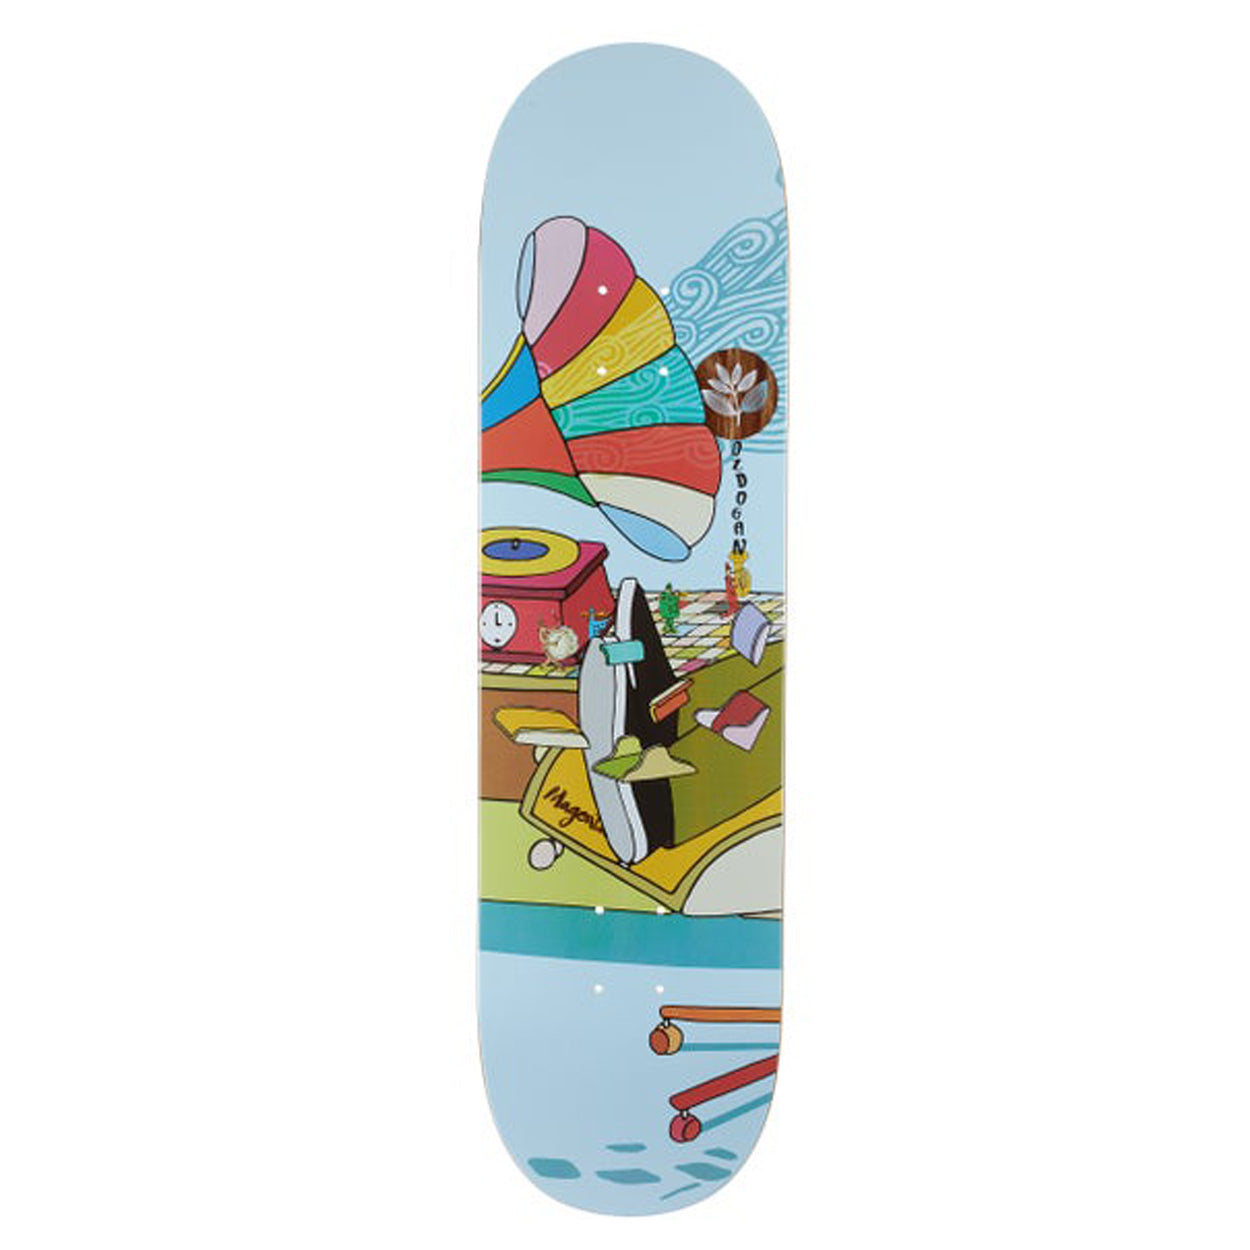 Magenta Skateboards Gunes Ozdogan Lucid Dream Skateboard Deck